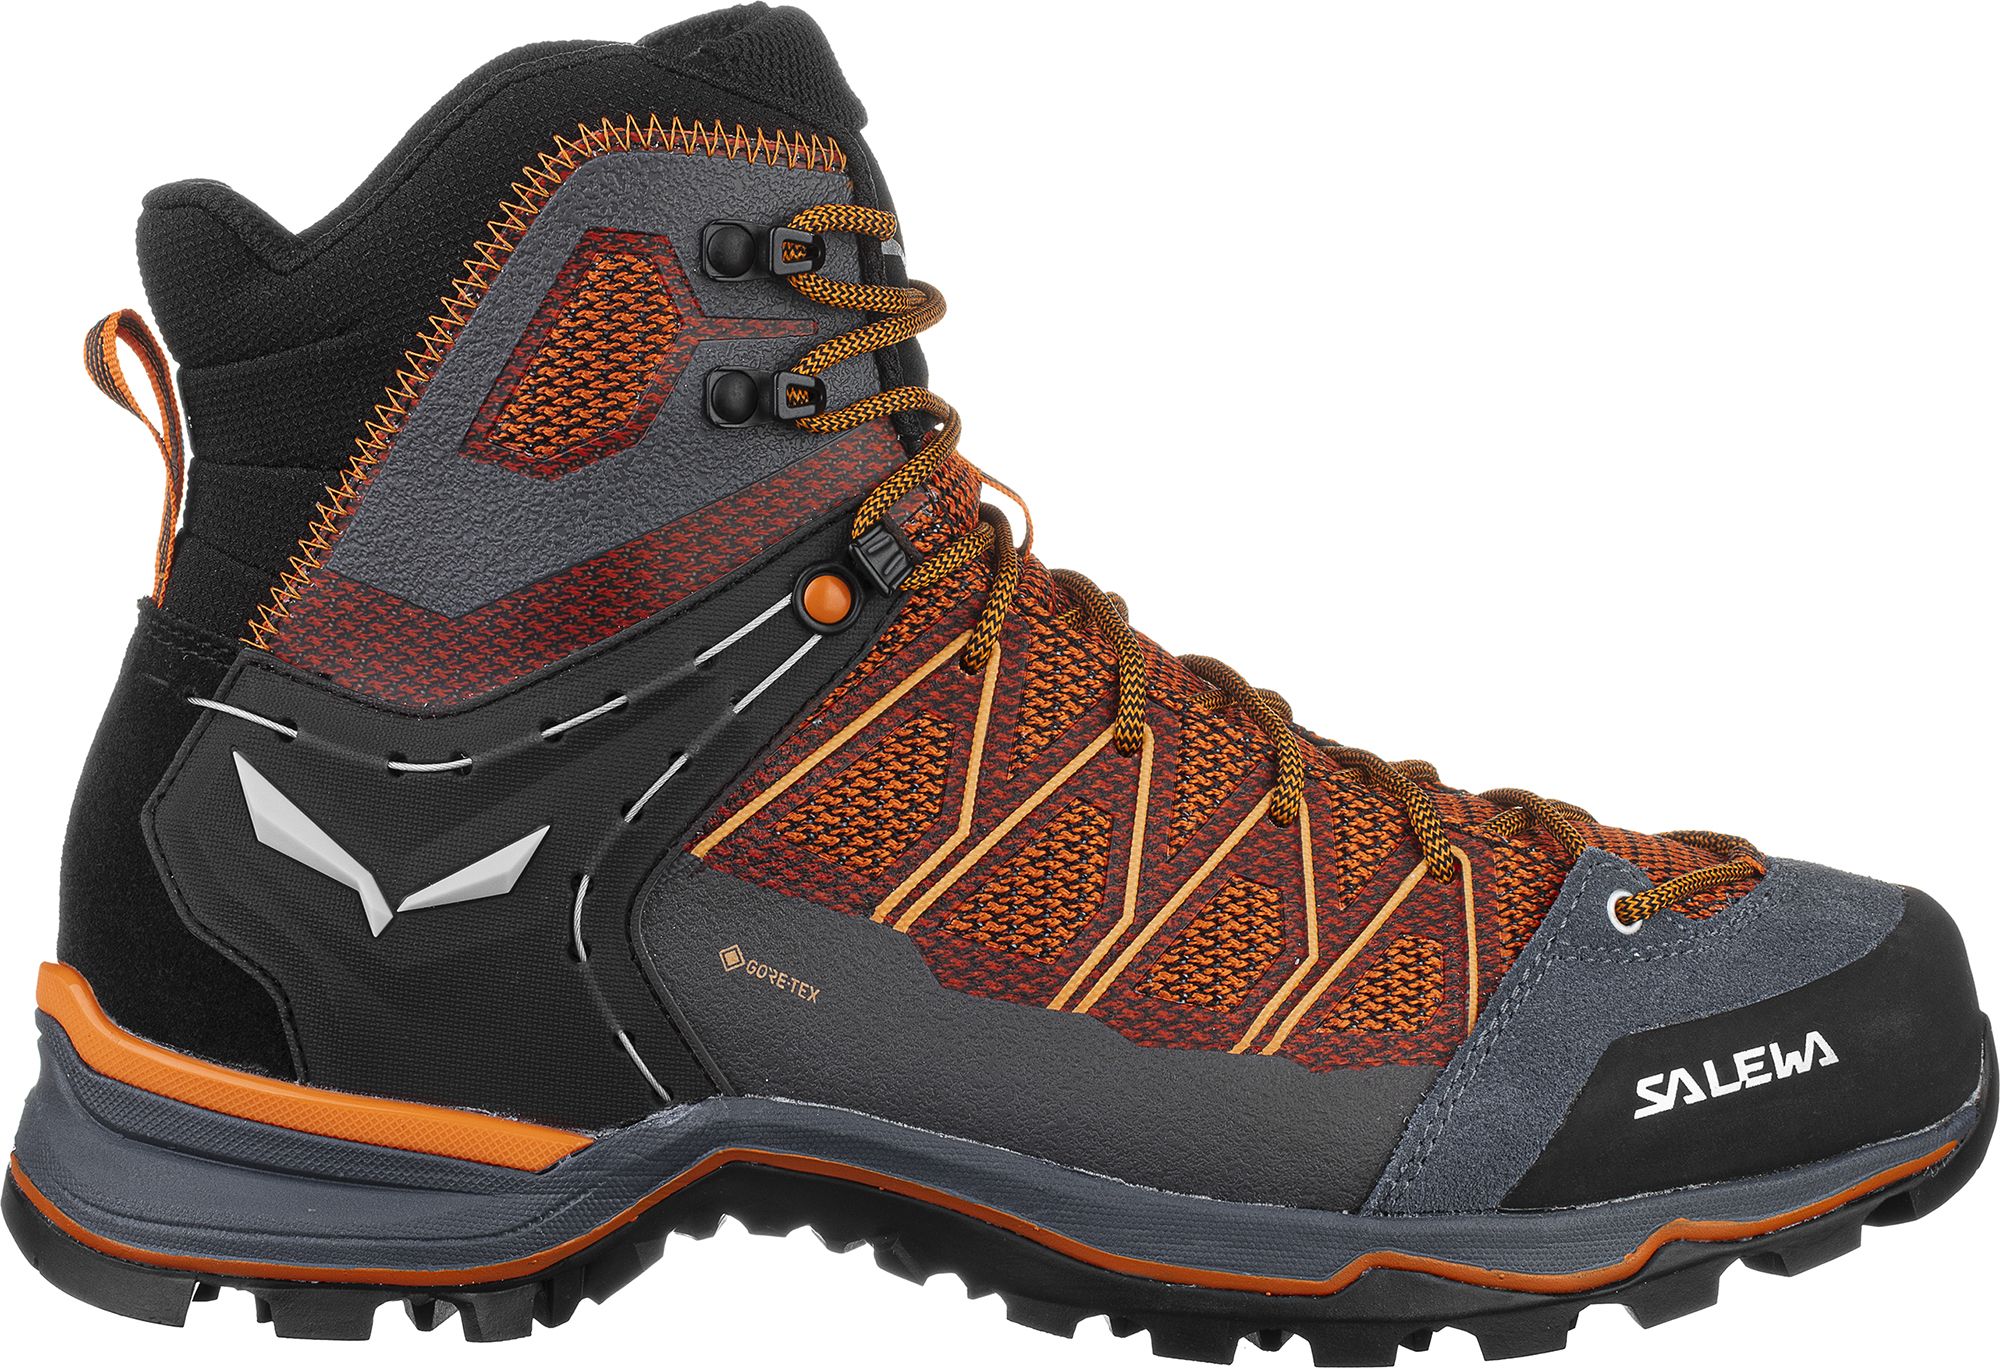 Photos - Trekking Shoes Salewa Men's Mountain Trainer Lite Mid GORE-TEX Hiking Boots, Size 8.5, Bl 